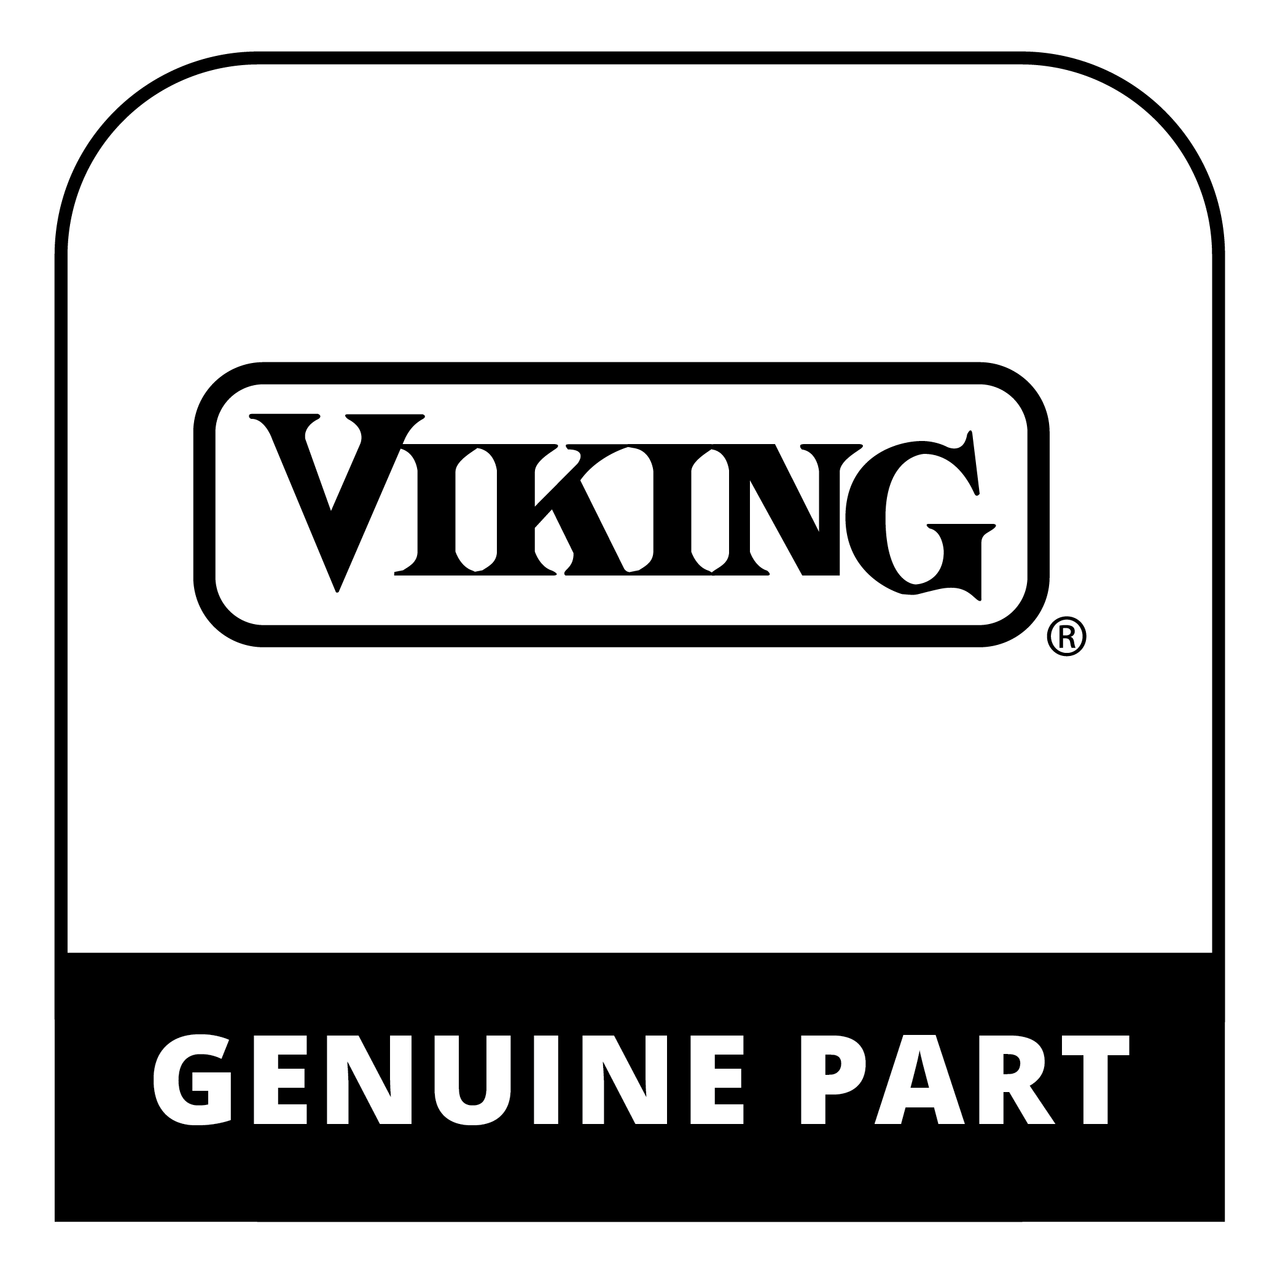 Viking 067216-000 - Bkt, Trim, Magnet, Columns 7 Series - Genuine Viking Part